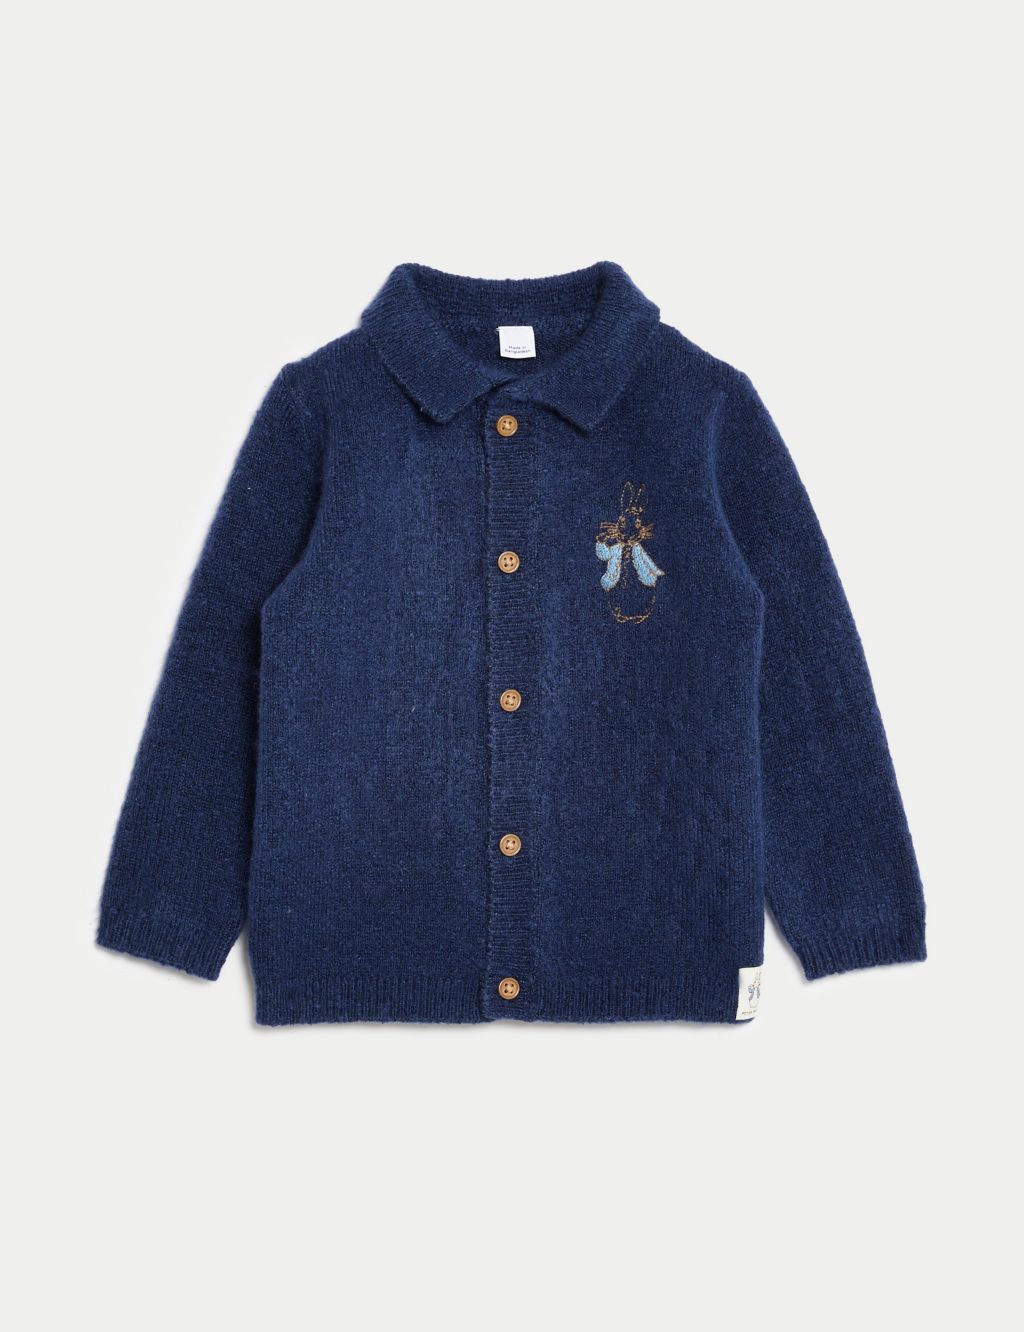 Peter Rabbit™ Knitted Cardigan (0-3 Yrs) image 1